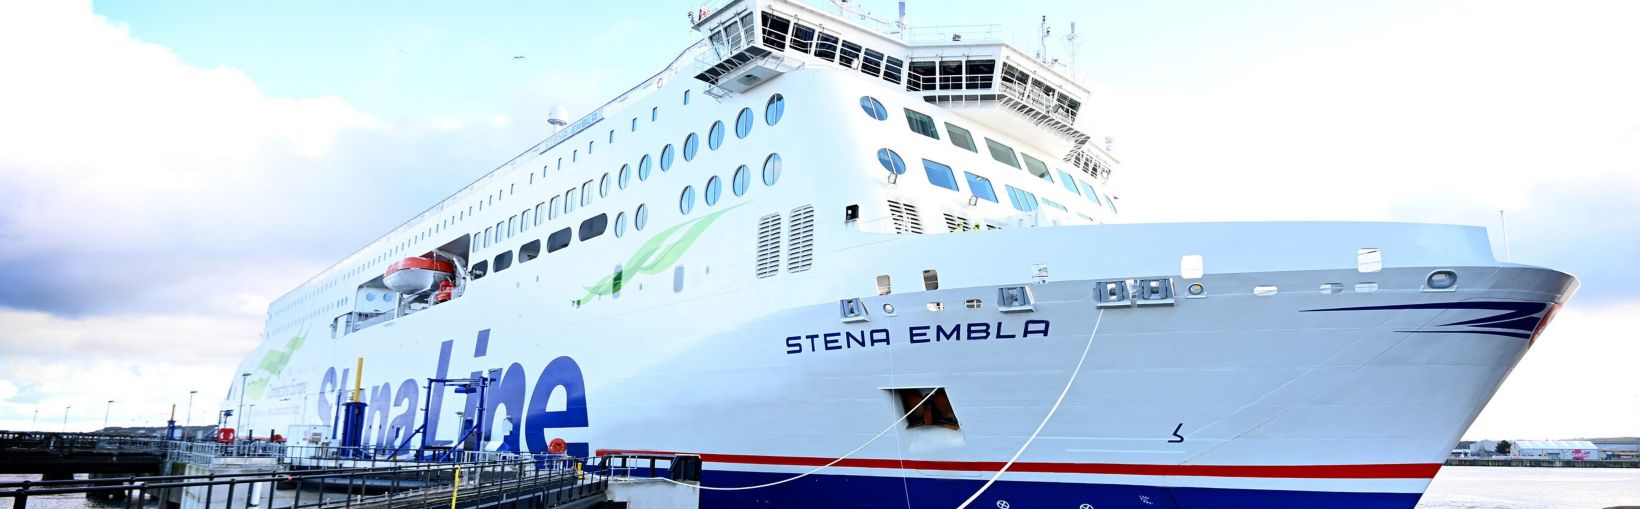 Le ferry Stena Embla accosté au port de Liverpool